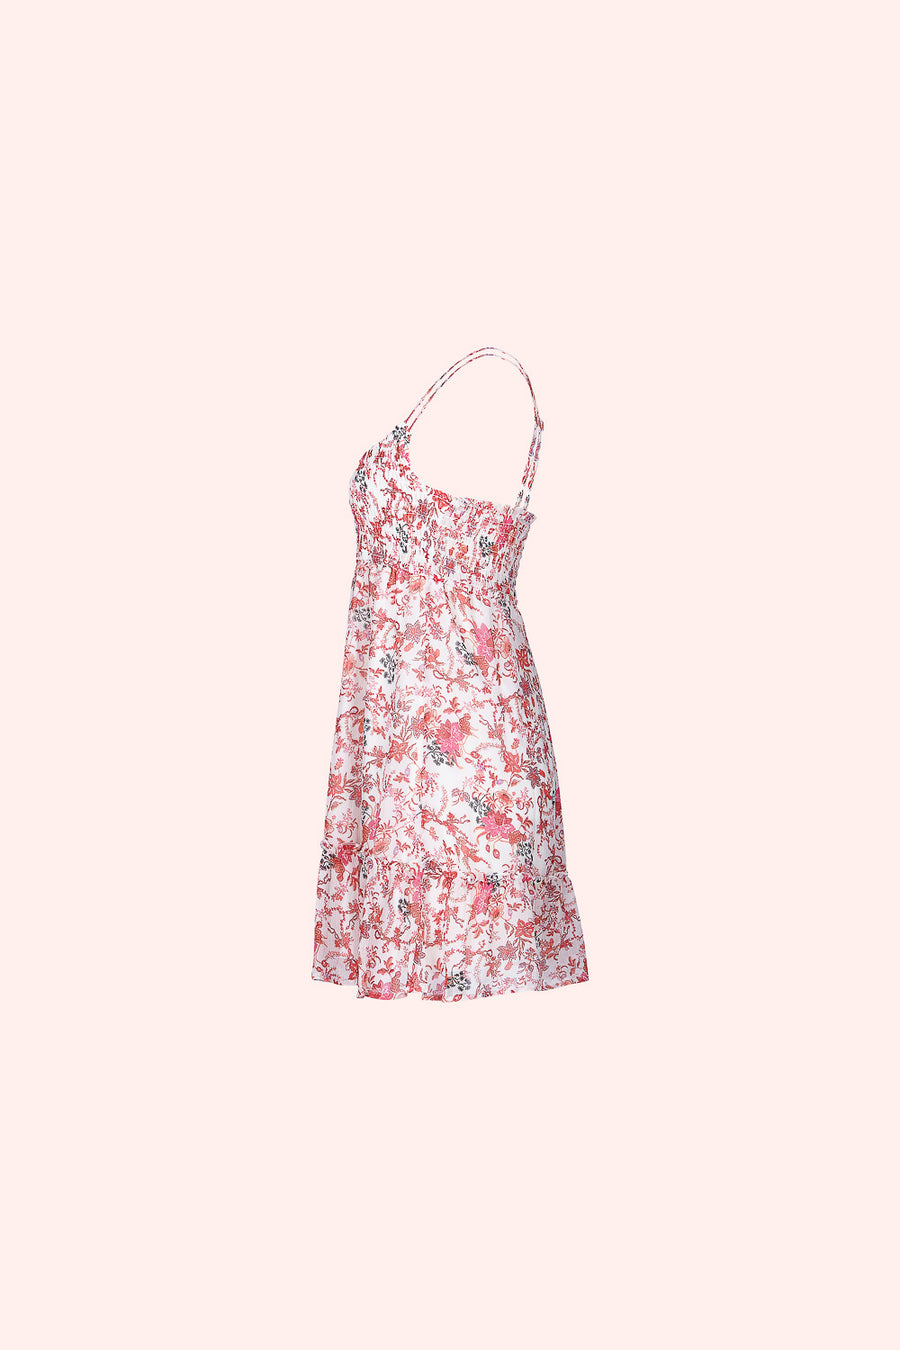 Pink Floral Smocked Dress - Trixxi Clothing